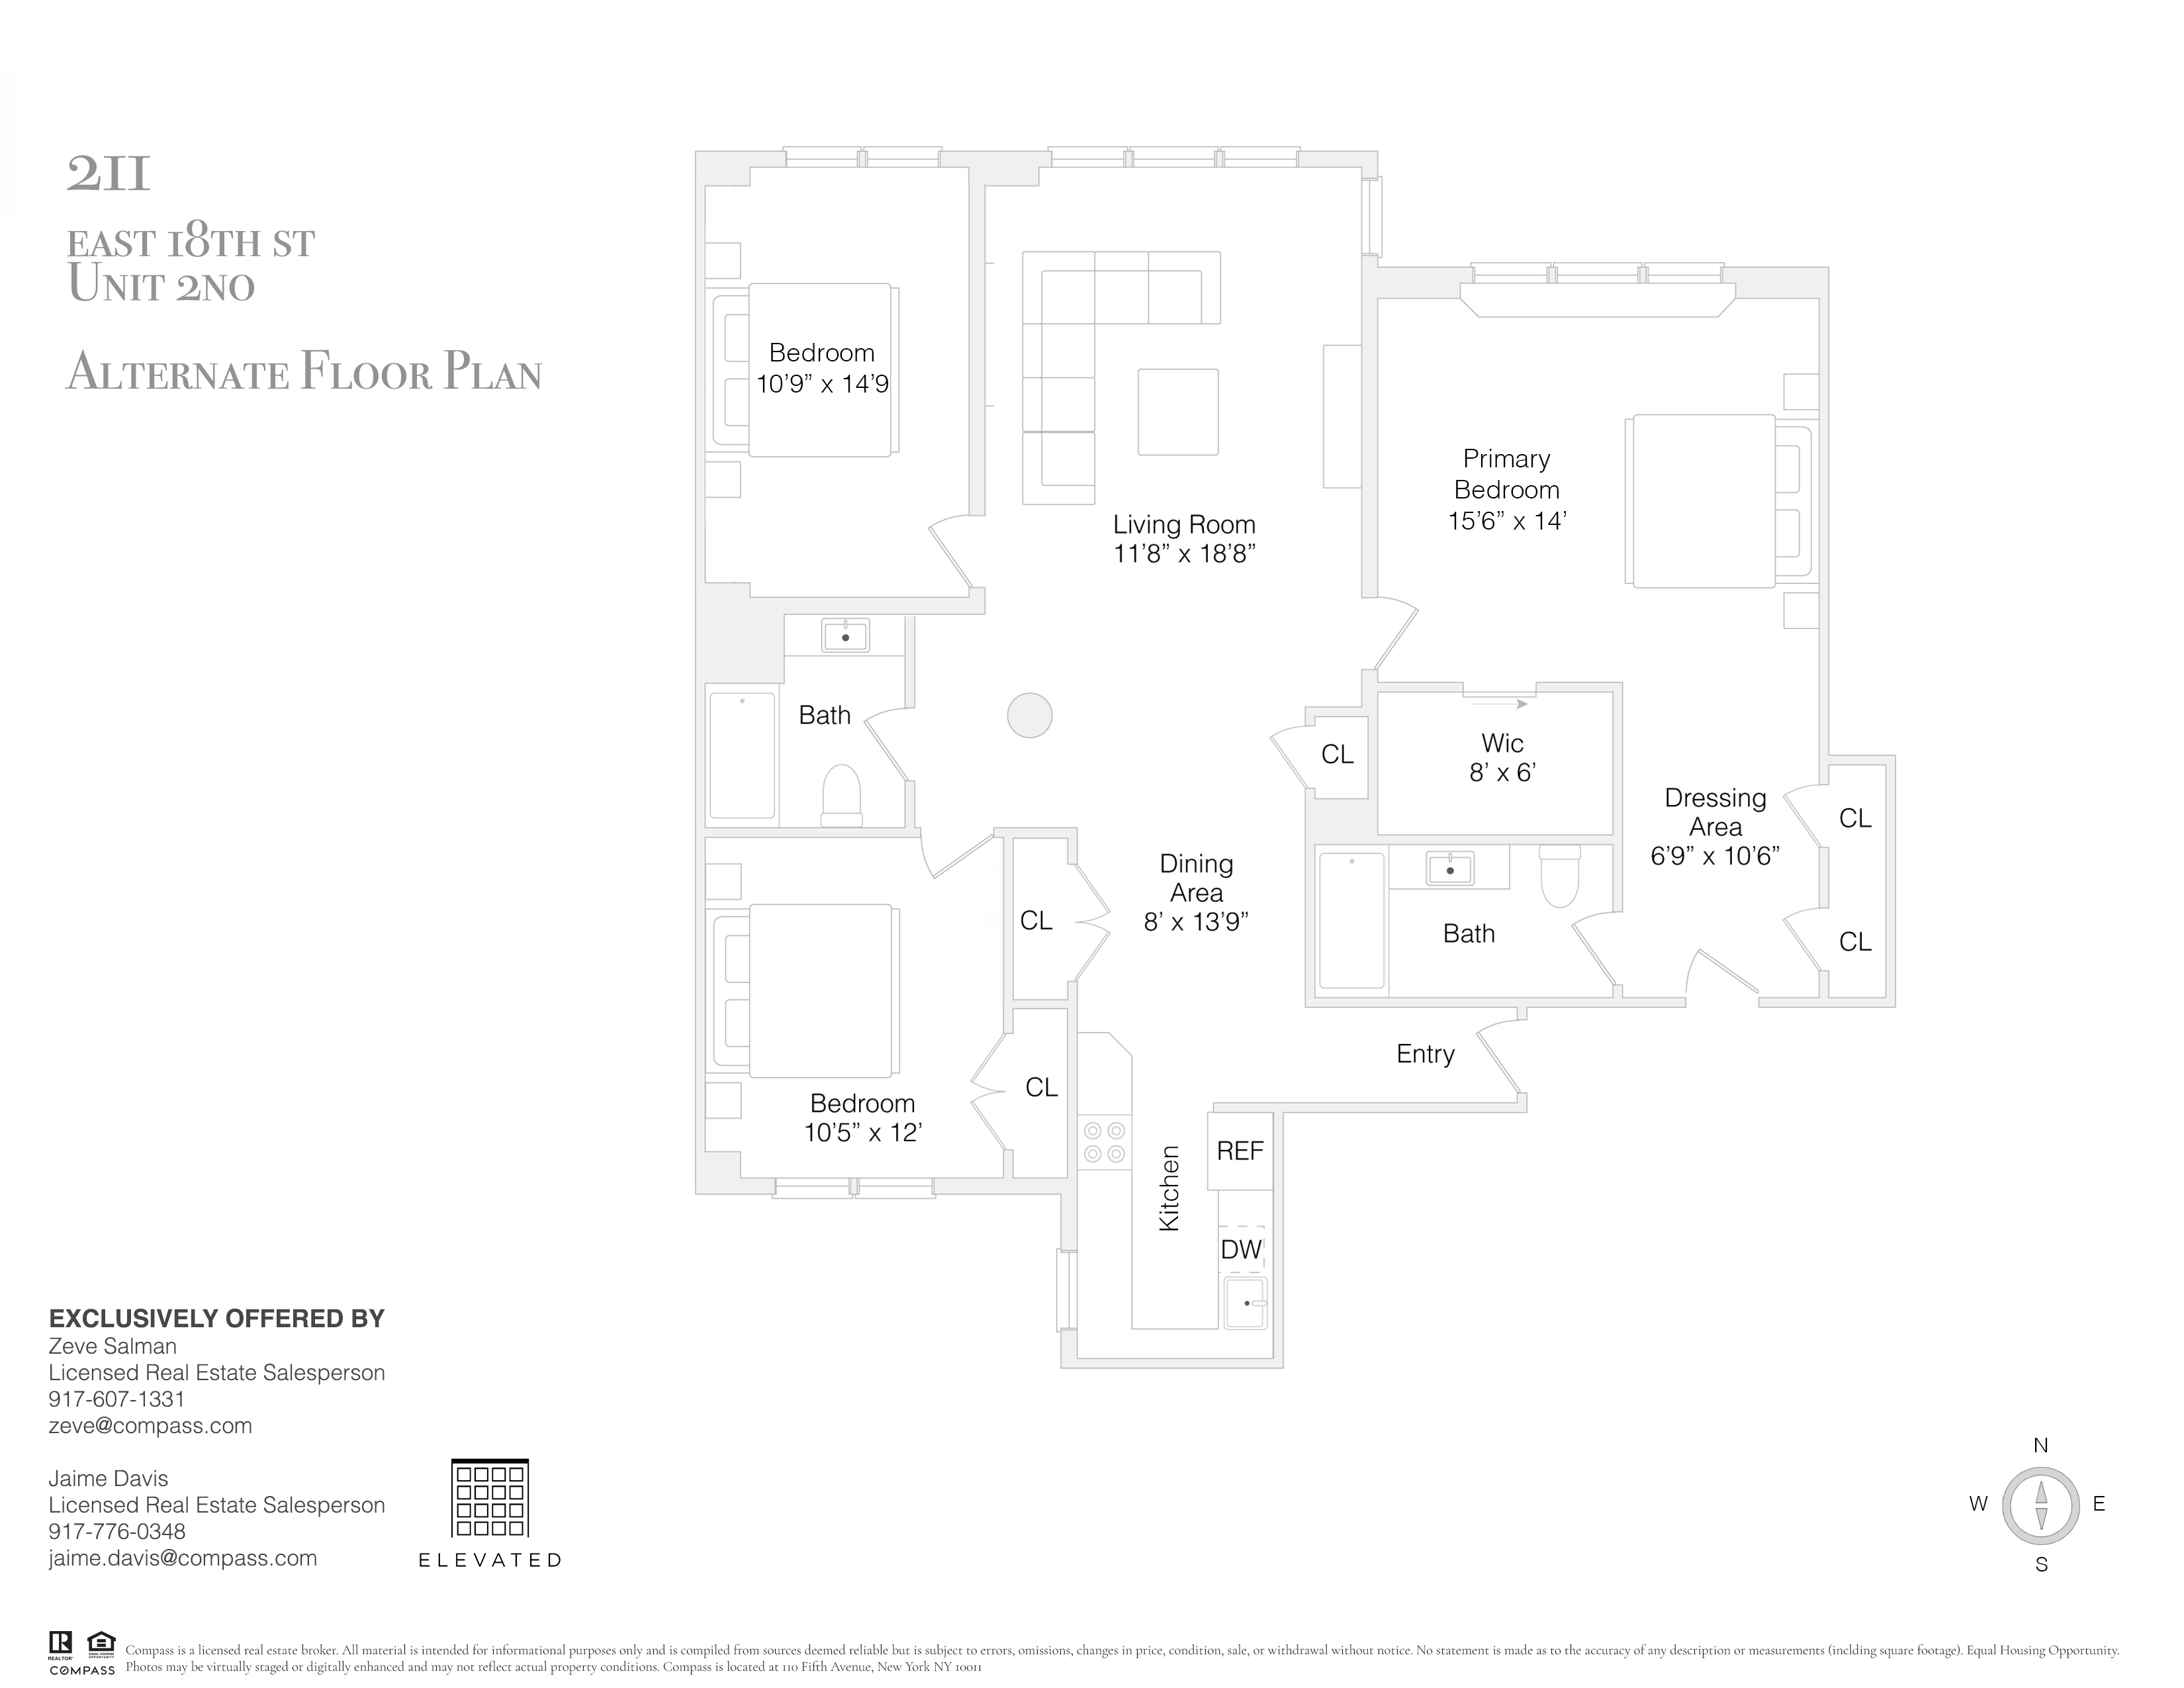 Floorplan for 211 East 18th Street, 2NO